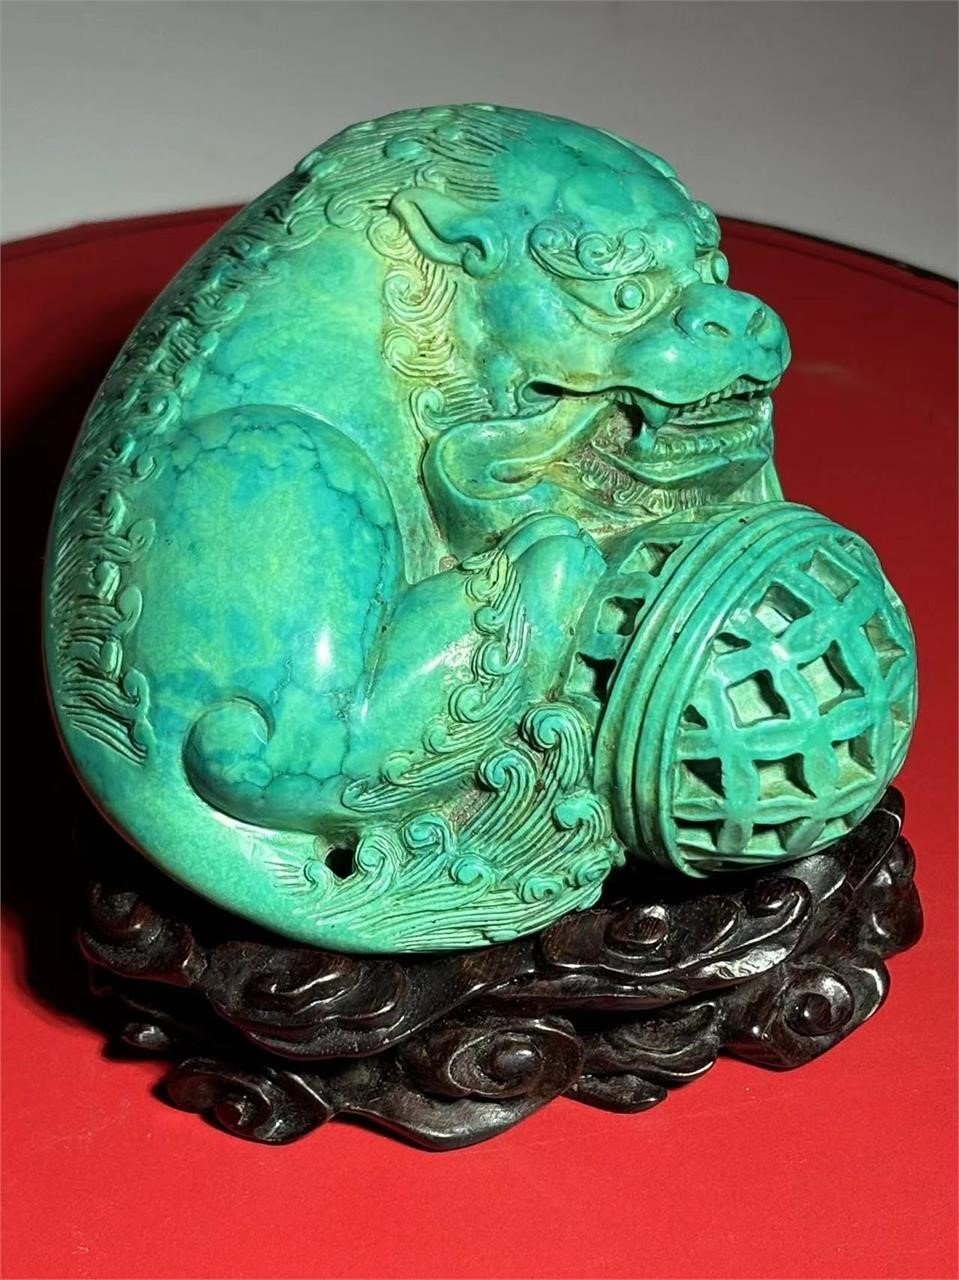 Turquoise dragon figurine